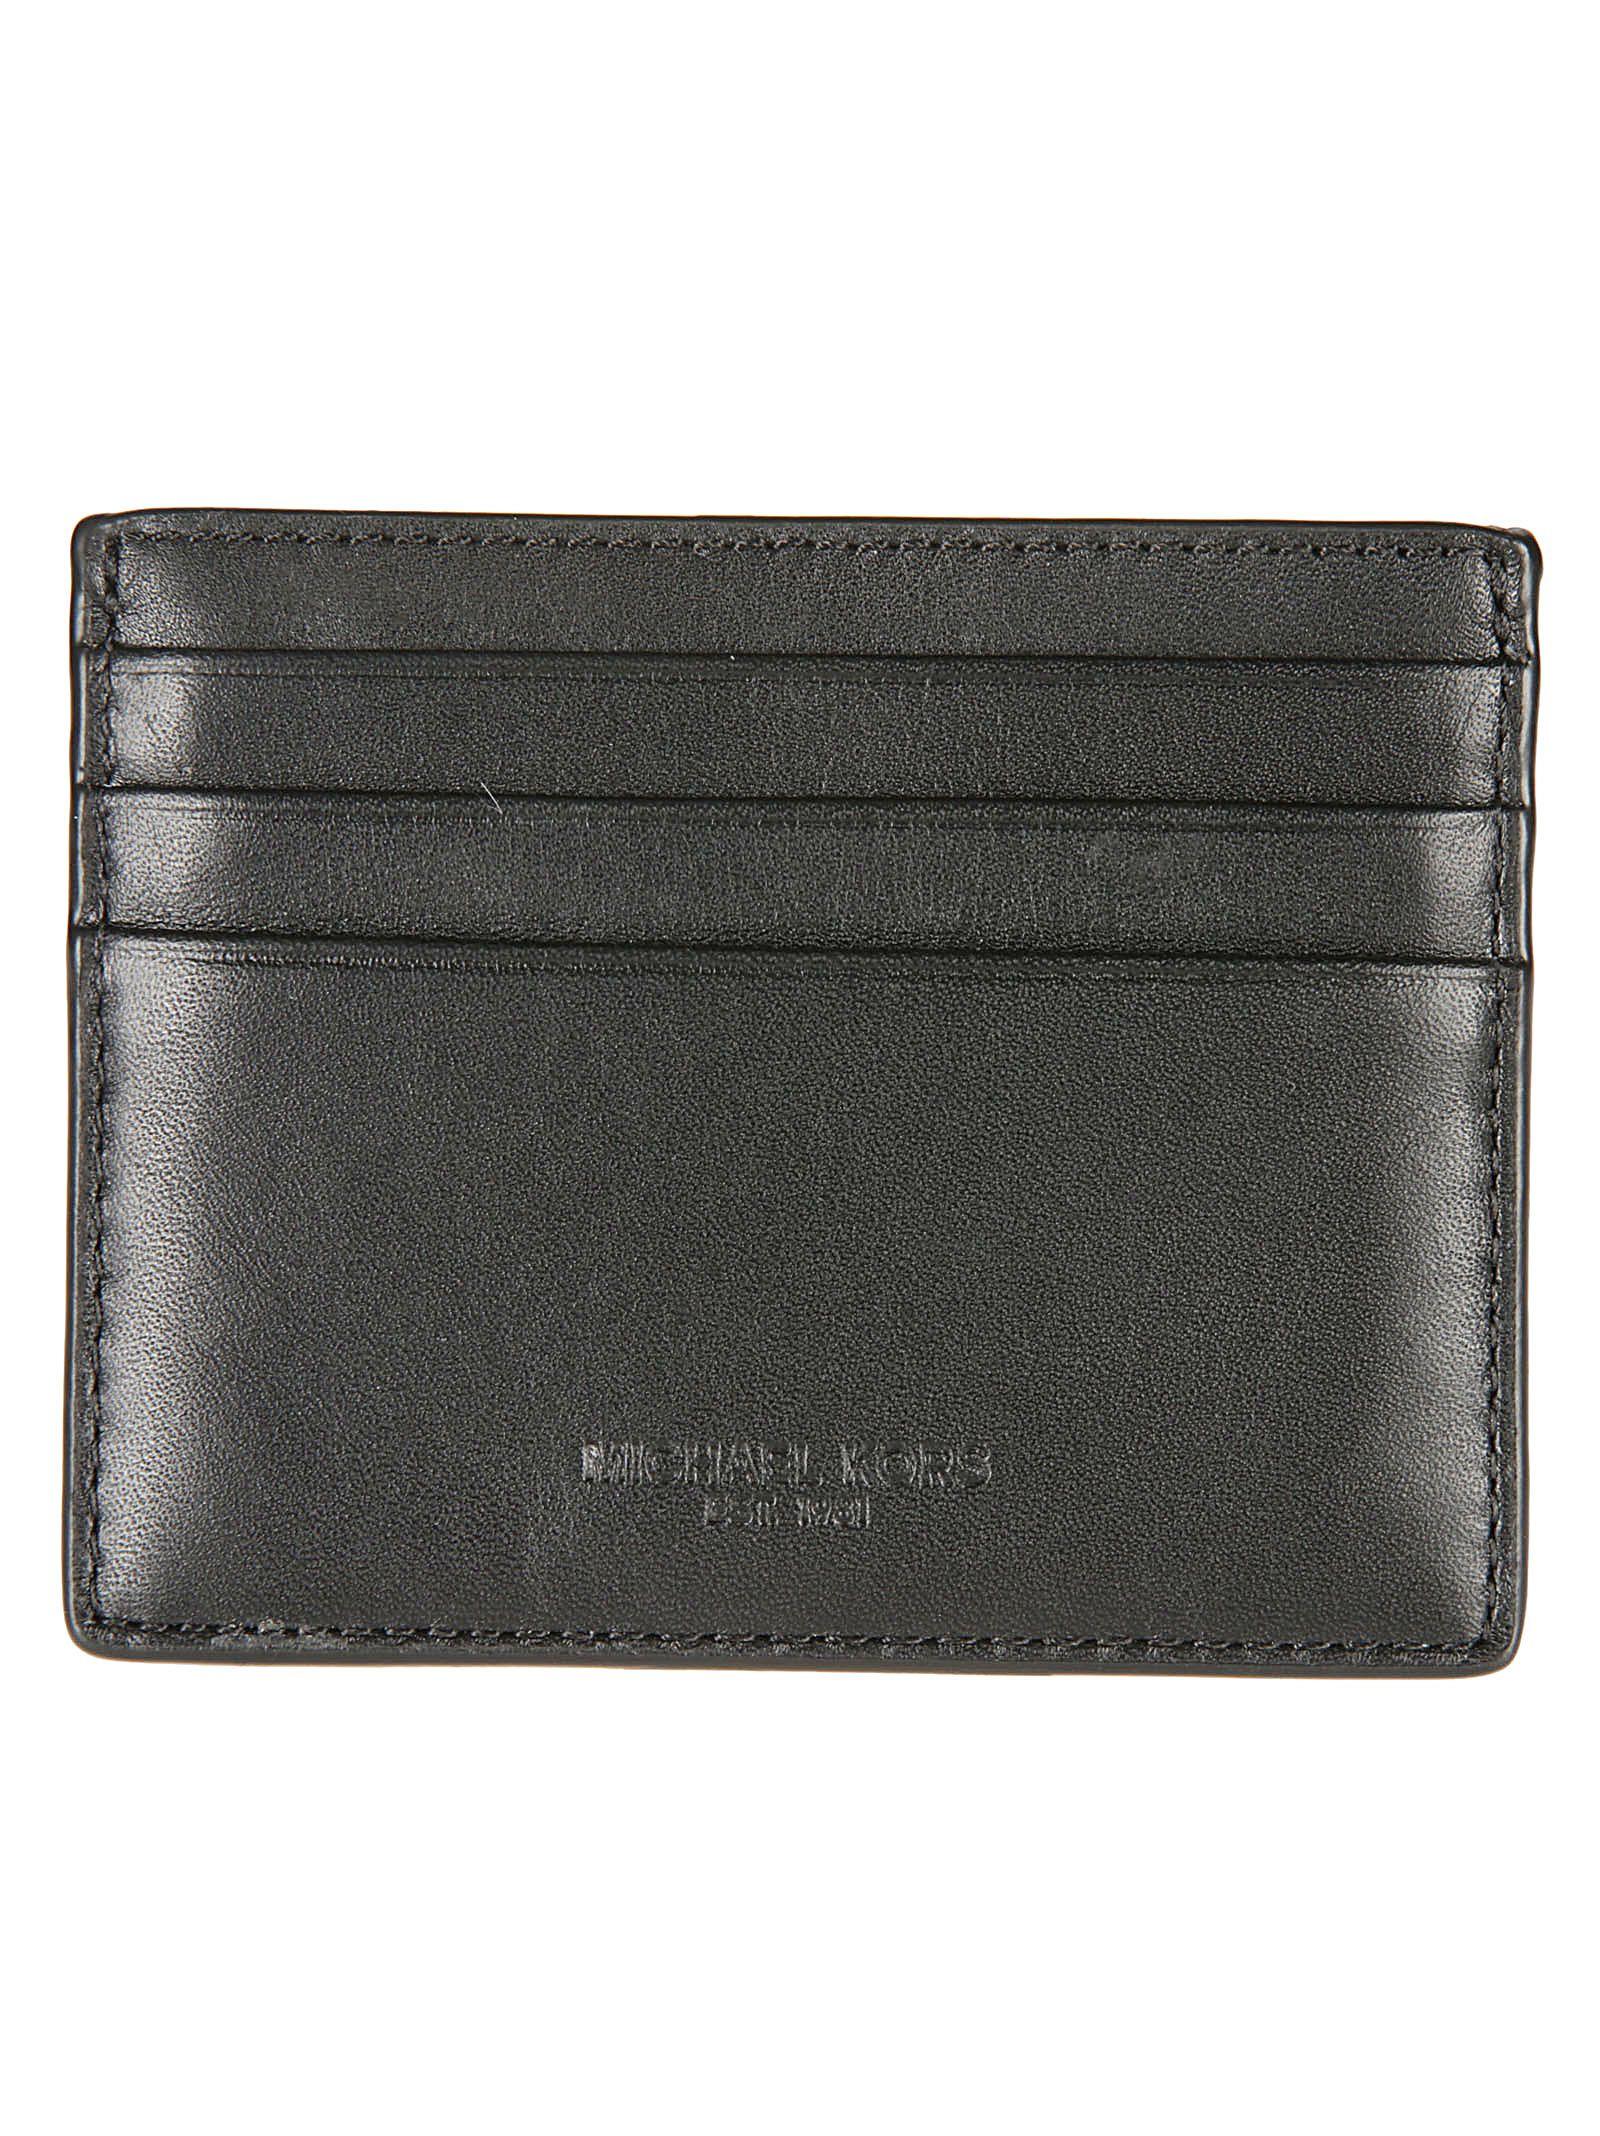 Michael Kors Black Leather Card Holder in Black for Men - Lyst